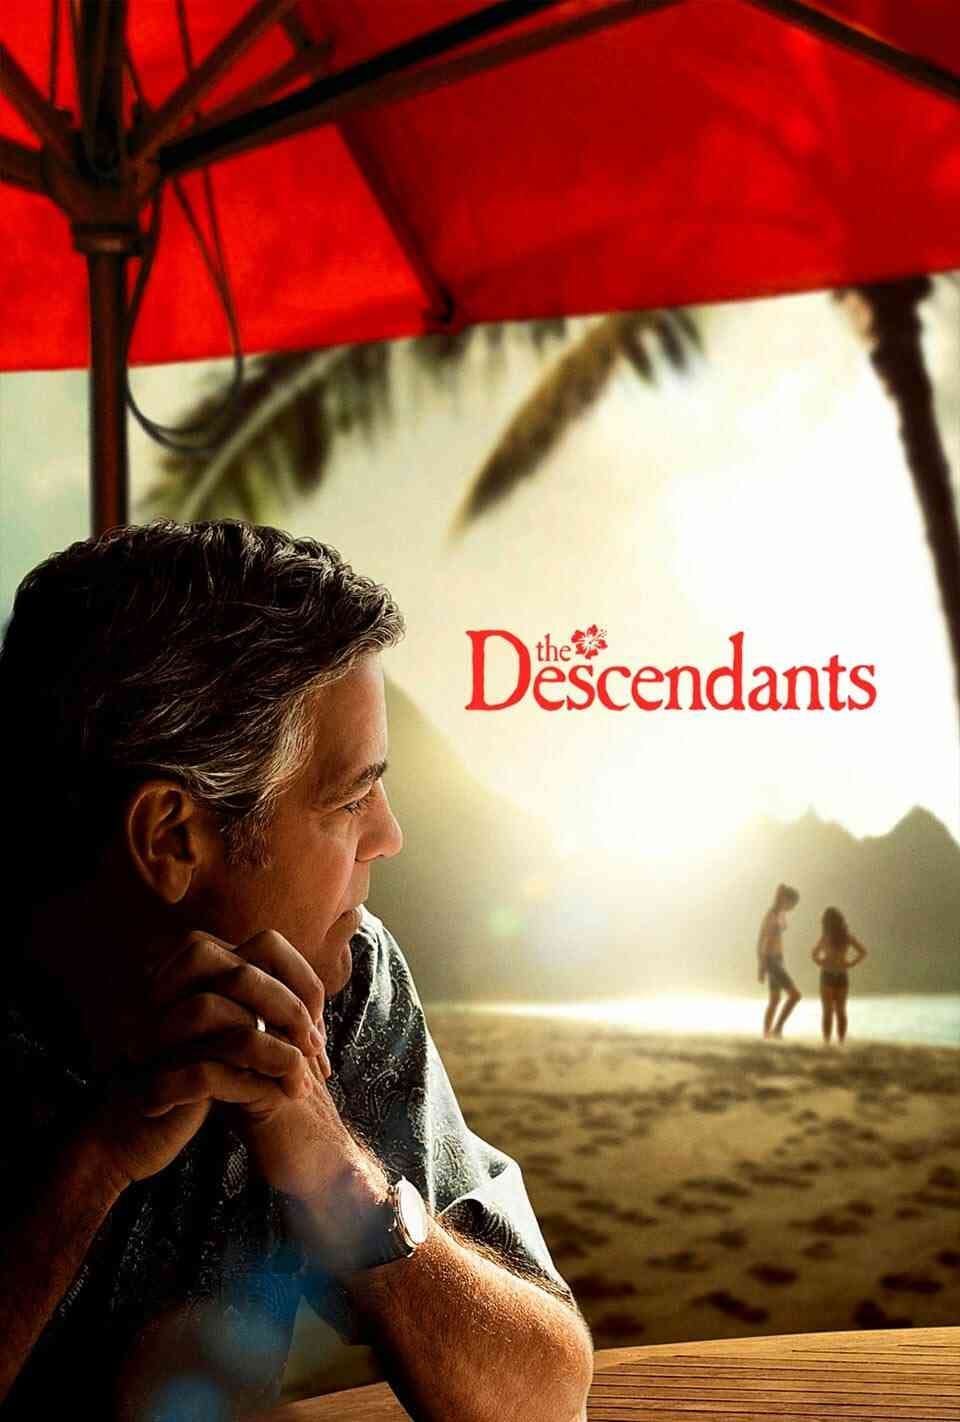 Read The Descendants screenplay.